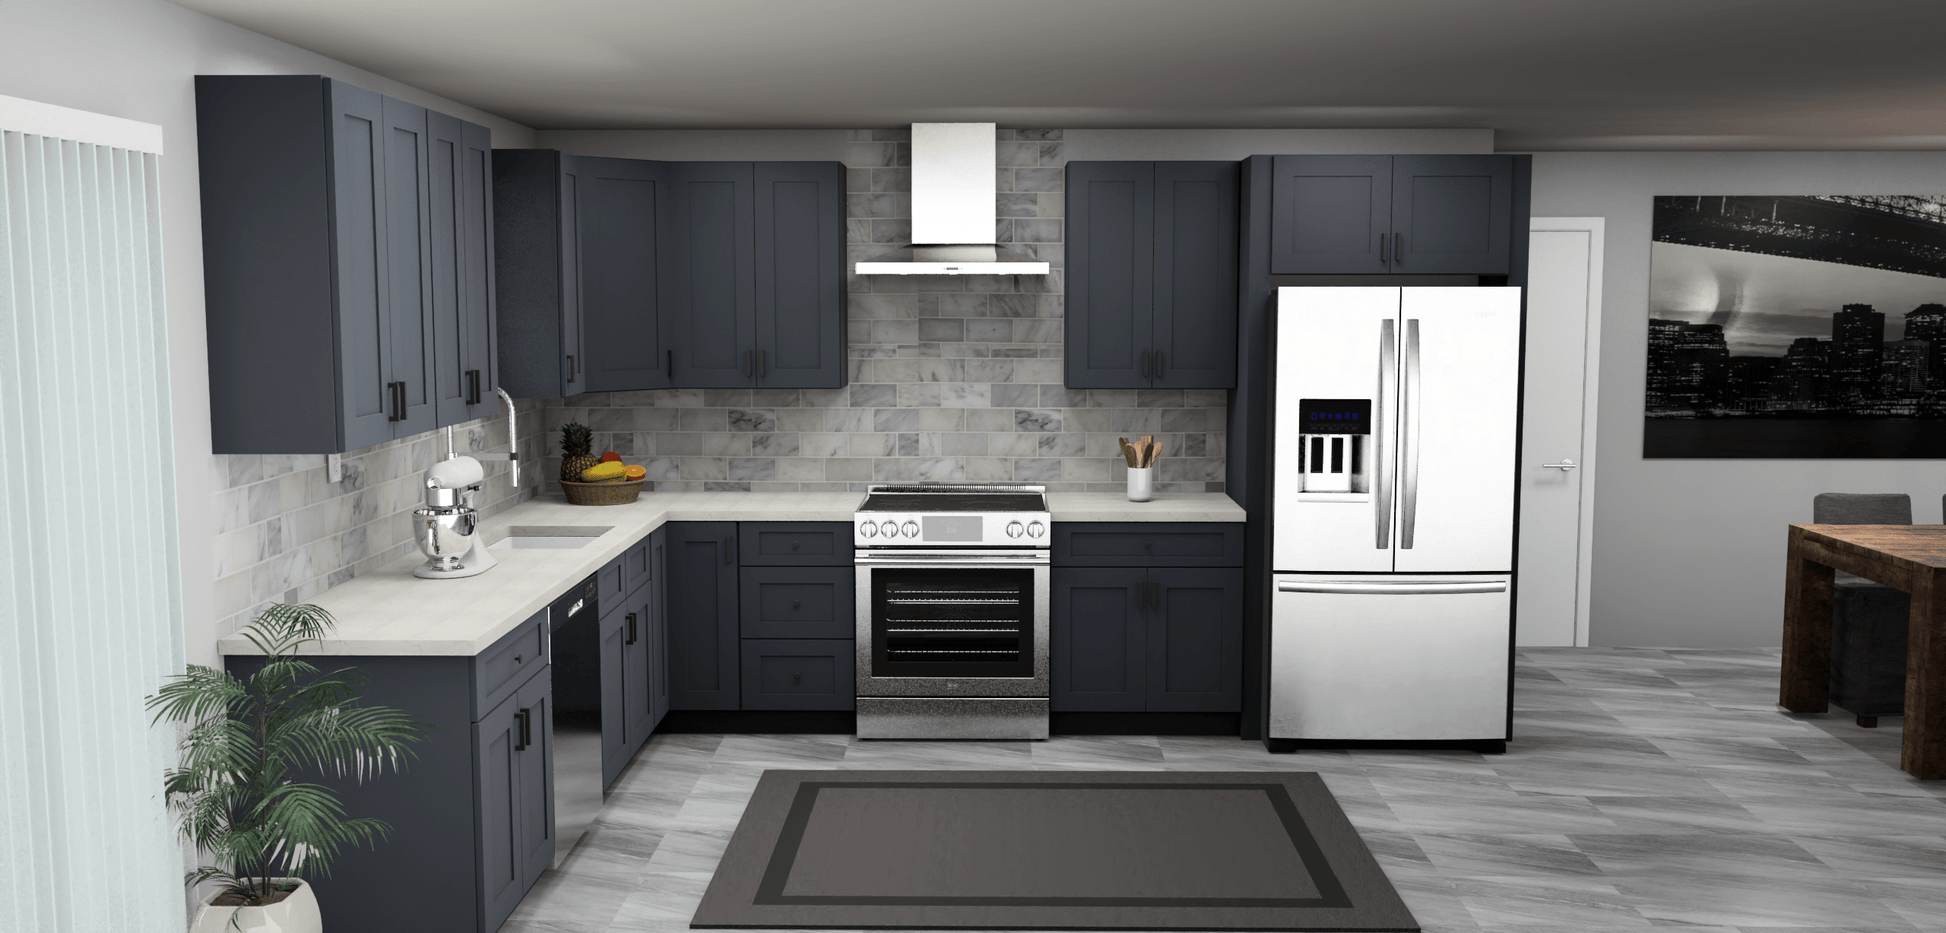 Fabuwood Allure Galaxy Indigo 10 x 13 L Shaped Kitchen Front Layout Photo